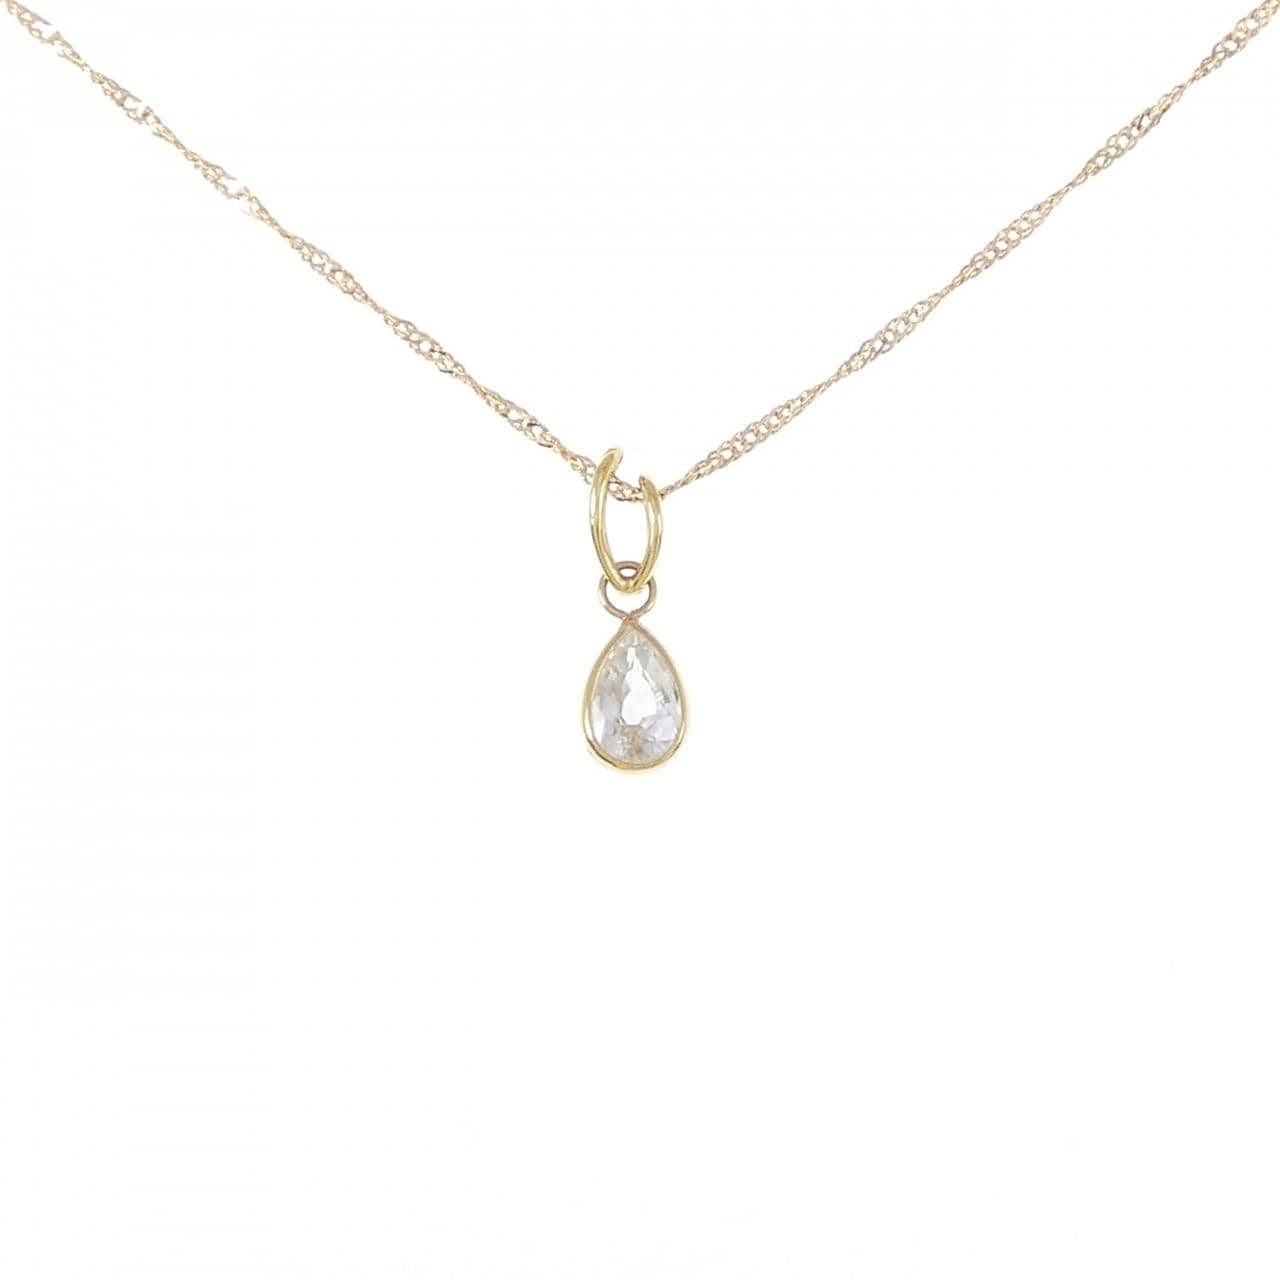 K18YG white sapphire necklace